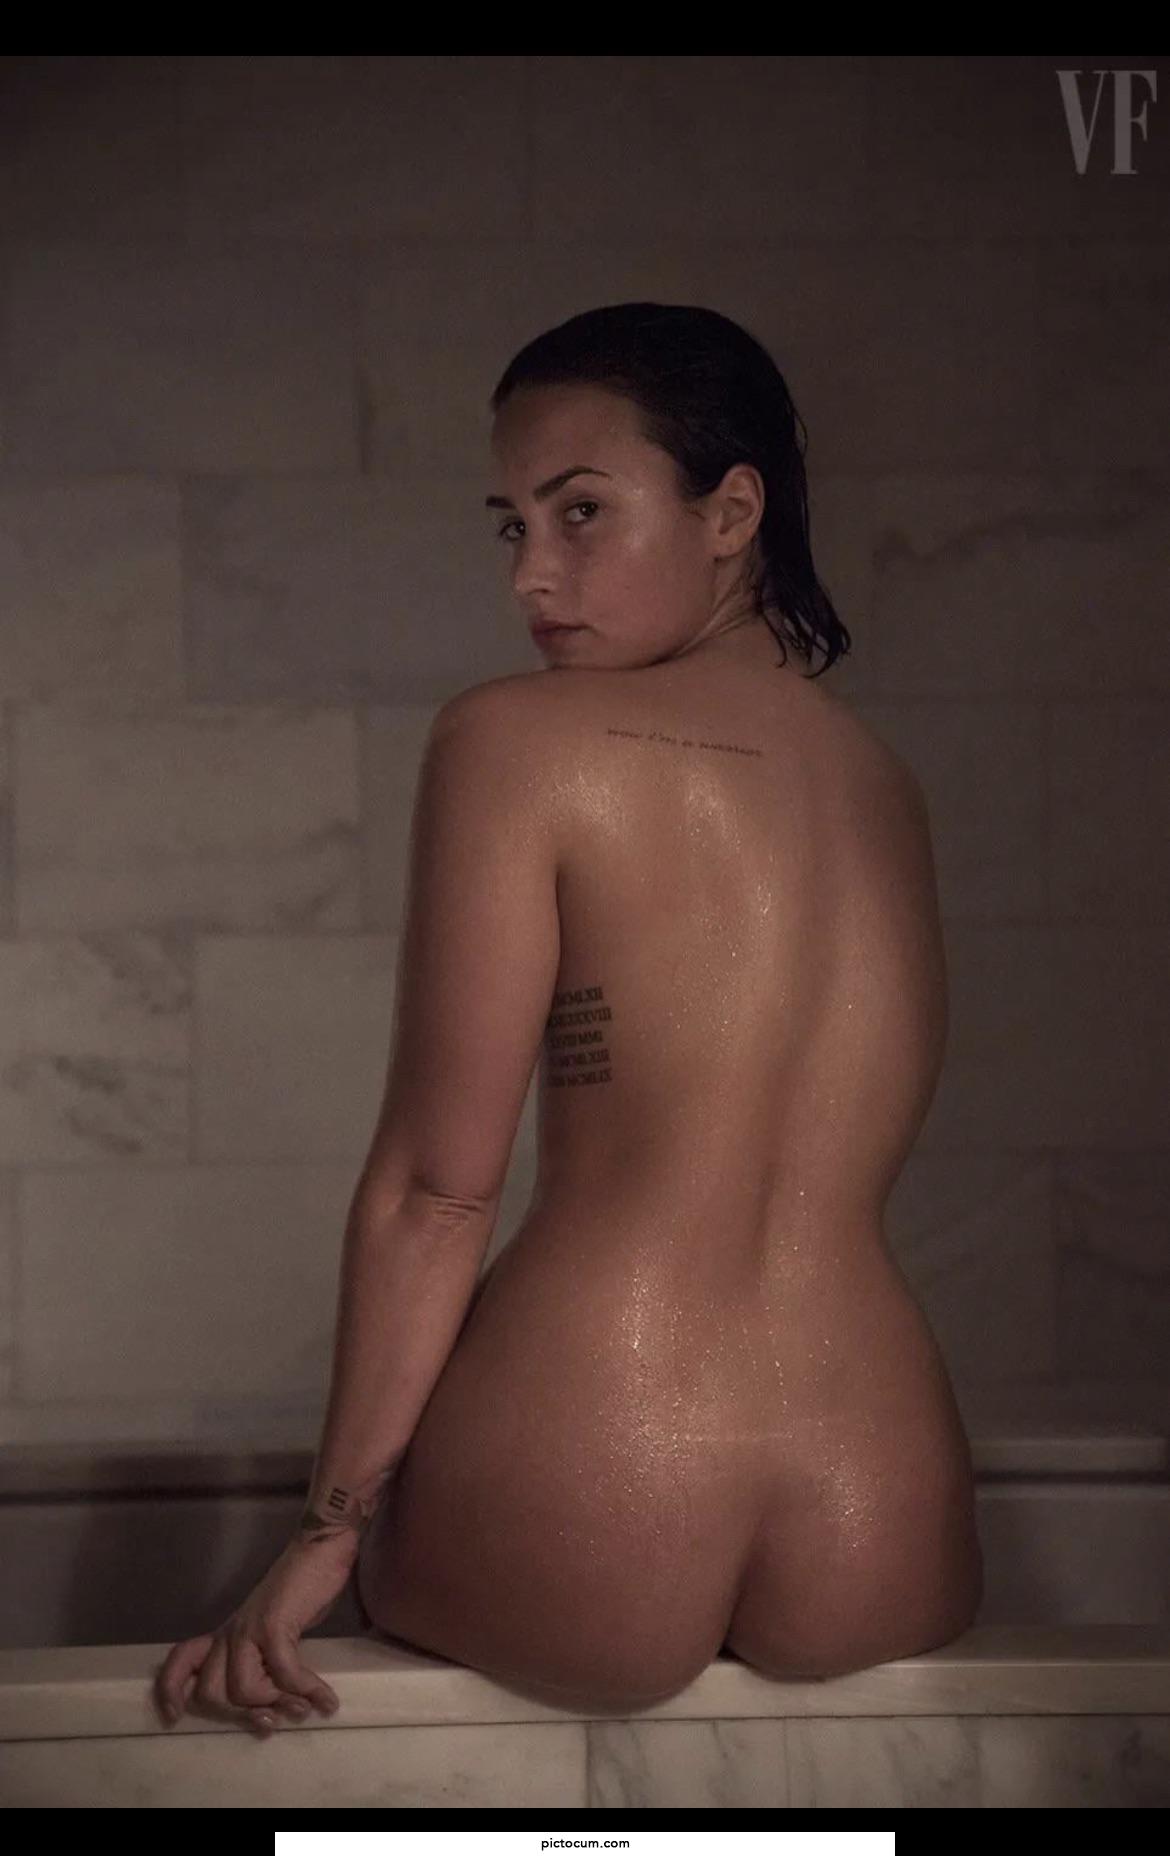 Demo Lovato has a nice ass 🍑